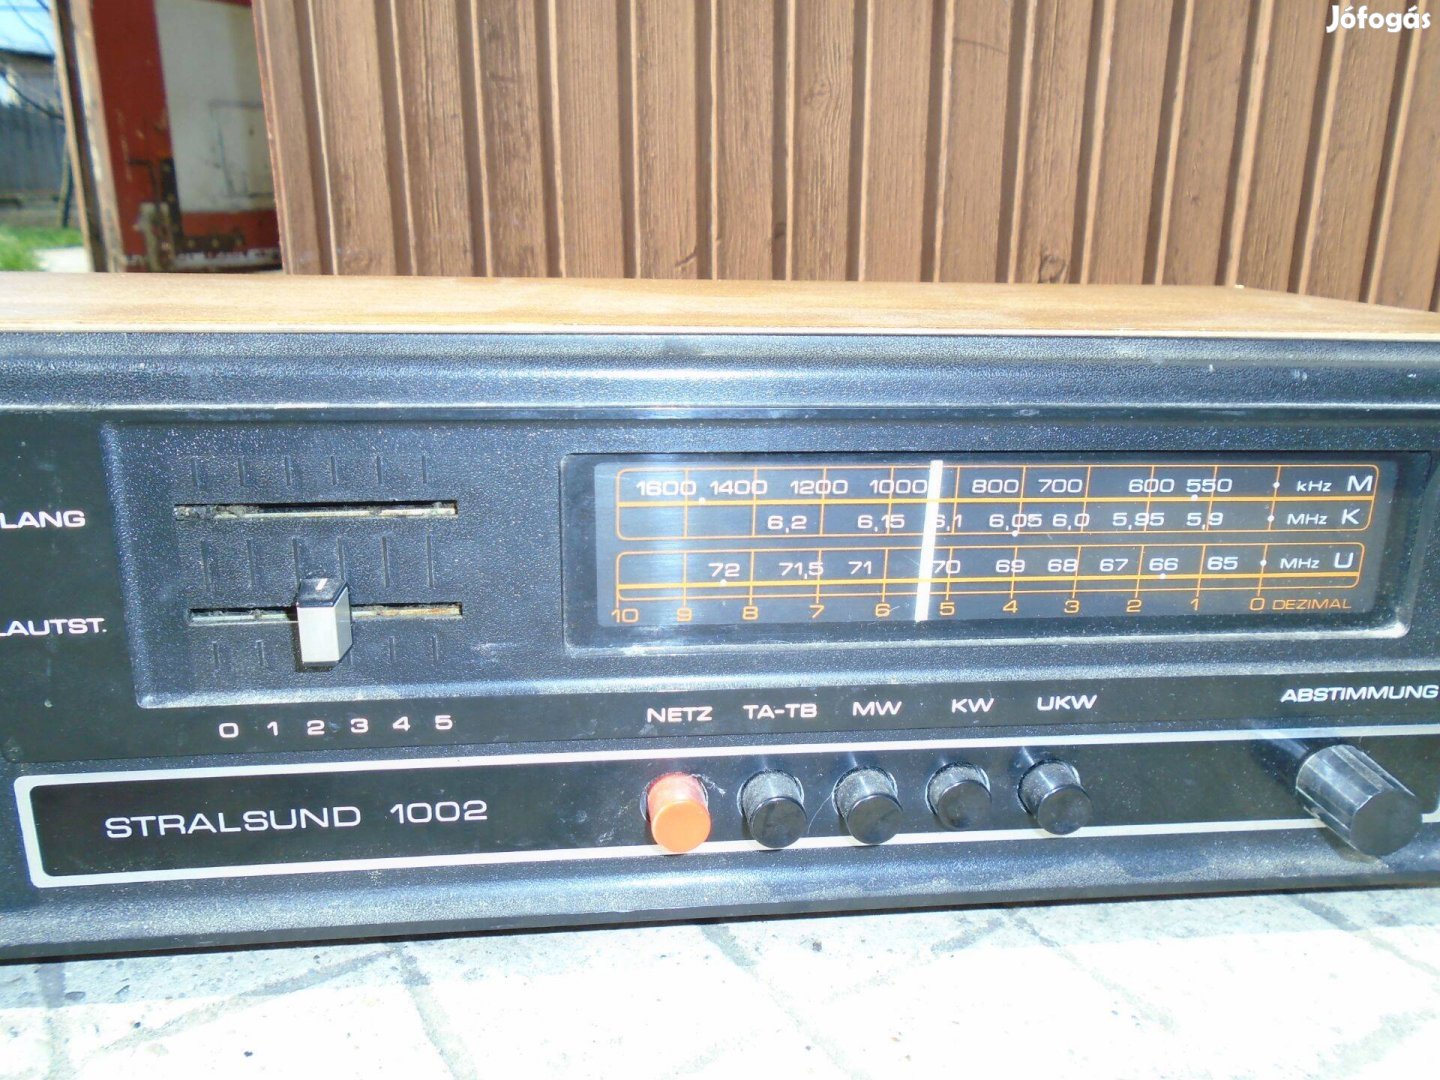 Robotron Stralsund 1002 rádió